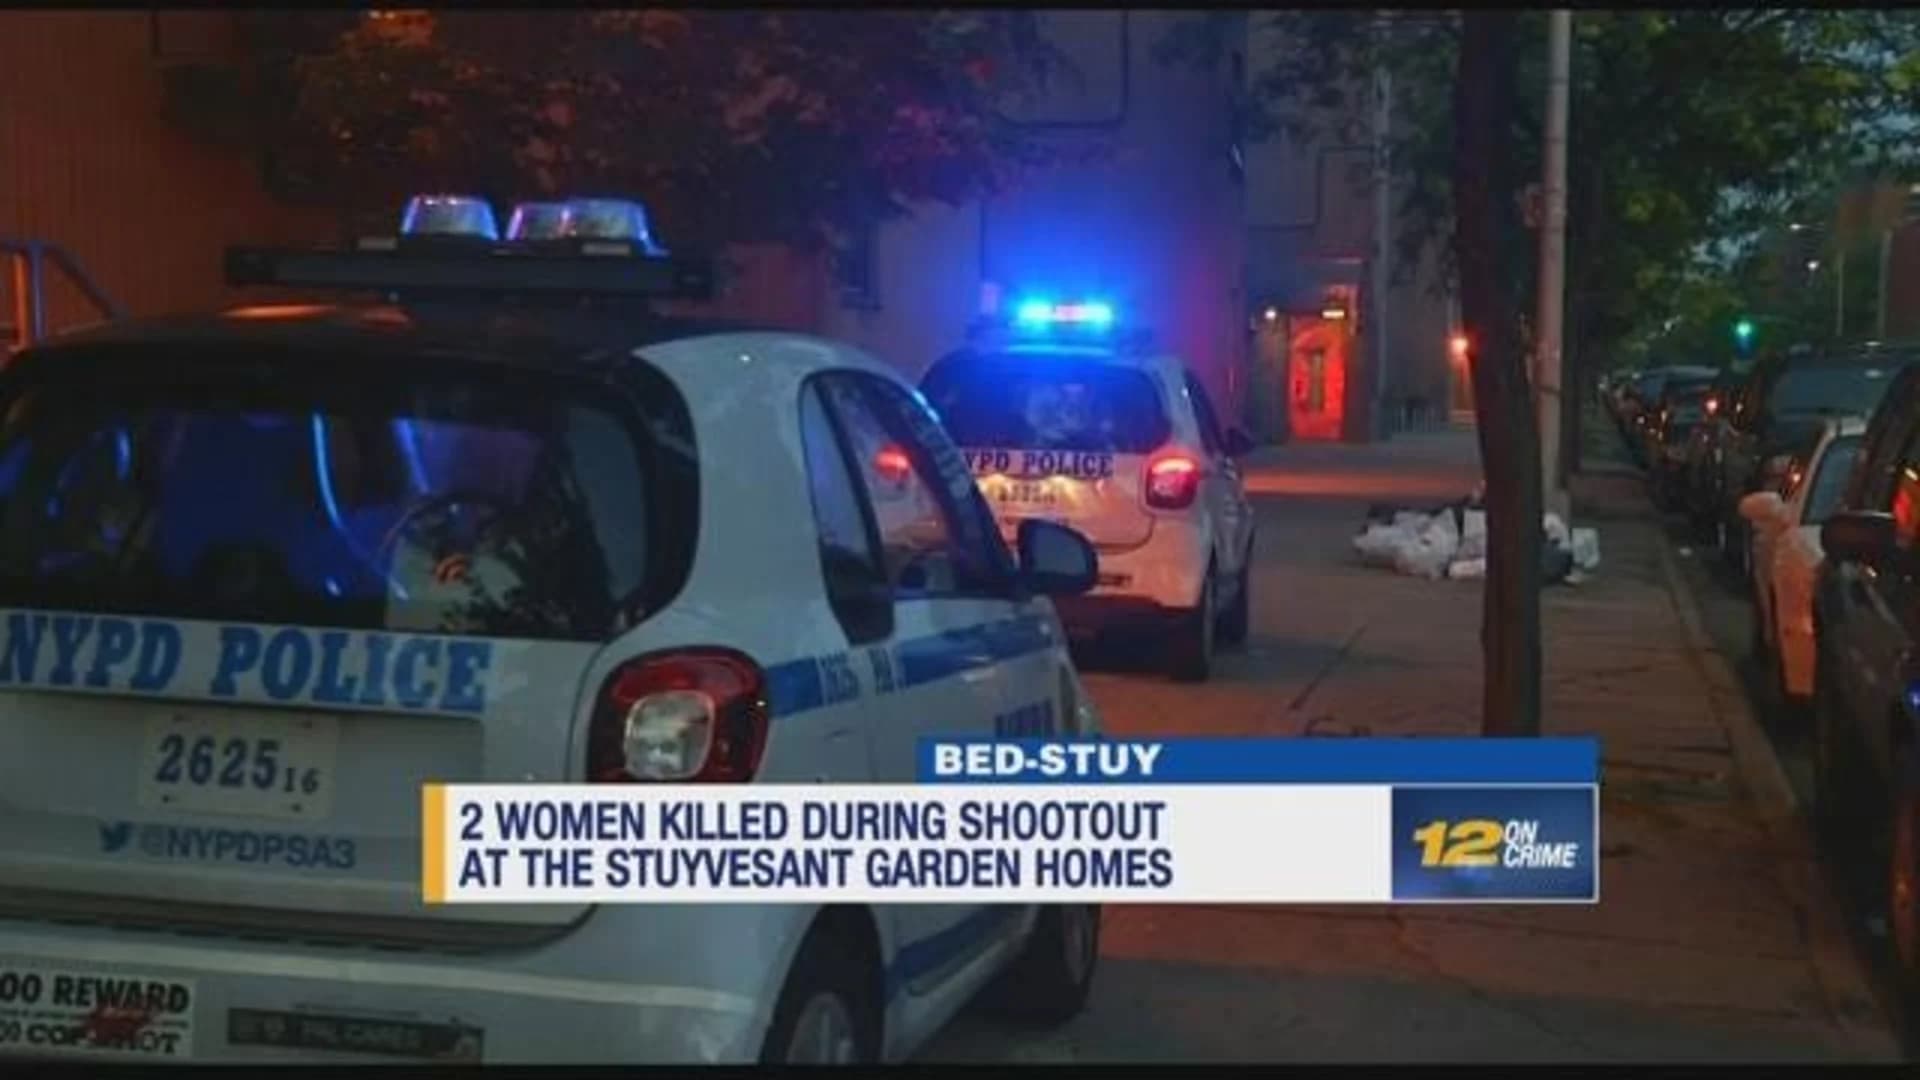 Bed-Stuy shooting leaves 2 moms dead